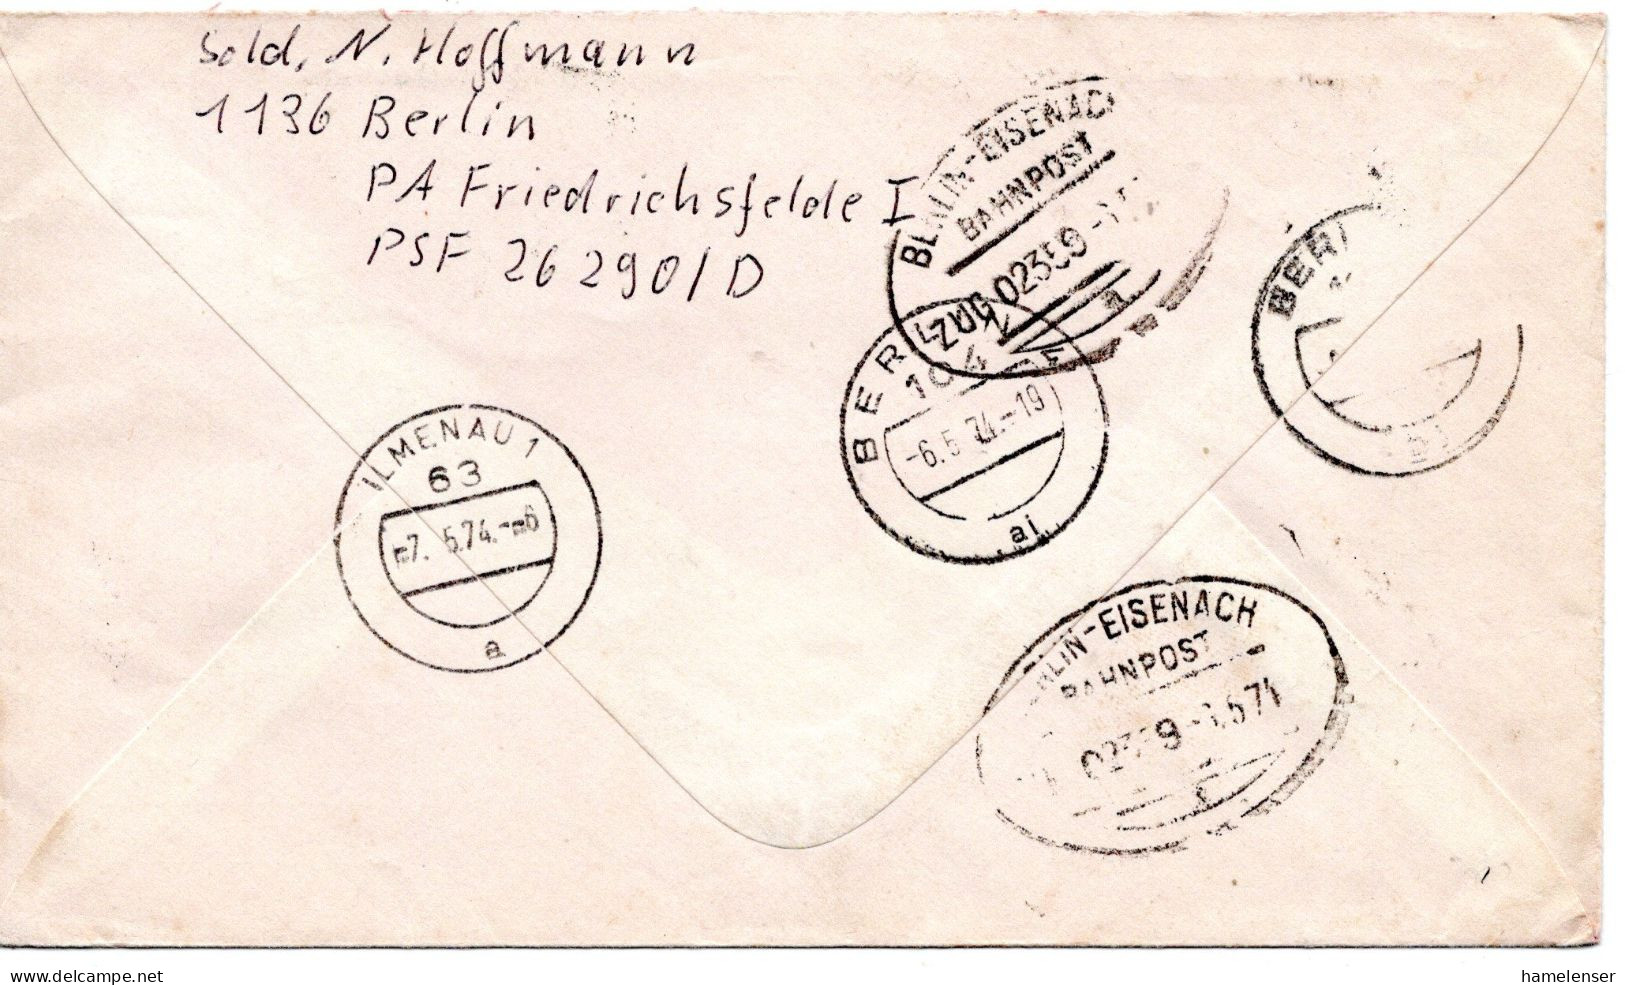 74891 - DDR - 1974 - 3@20Pfg Blaukehlchen MiF A EilBf BERLIN -> ILMENAU, Abs: NVA-Soldat - Covers & Documents